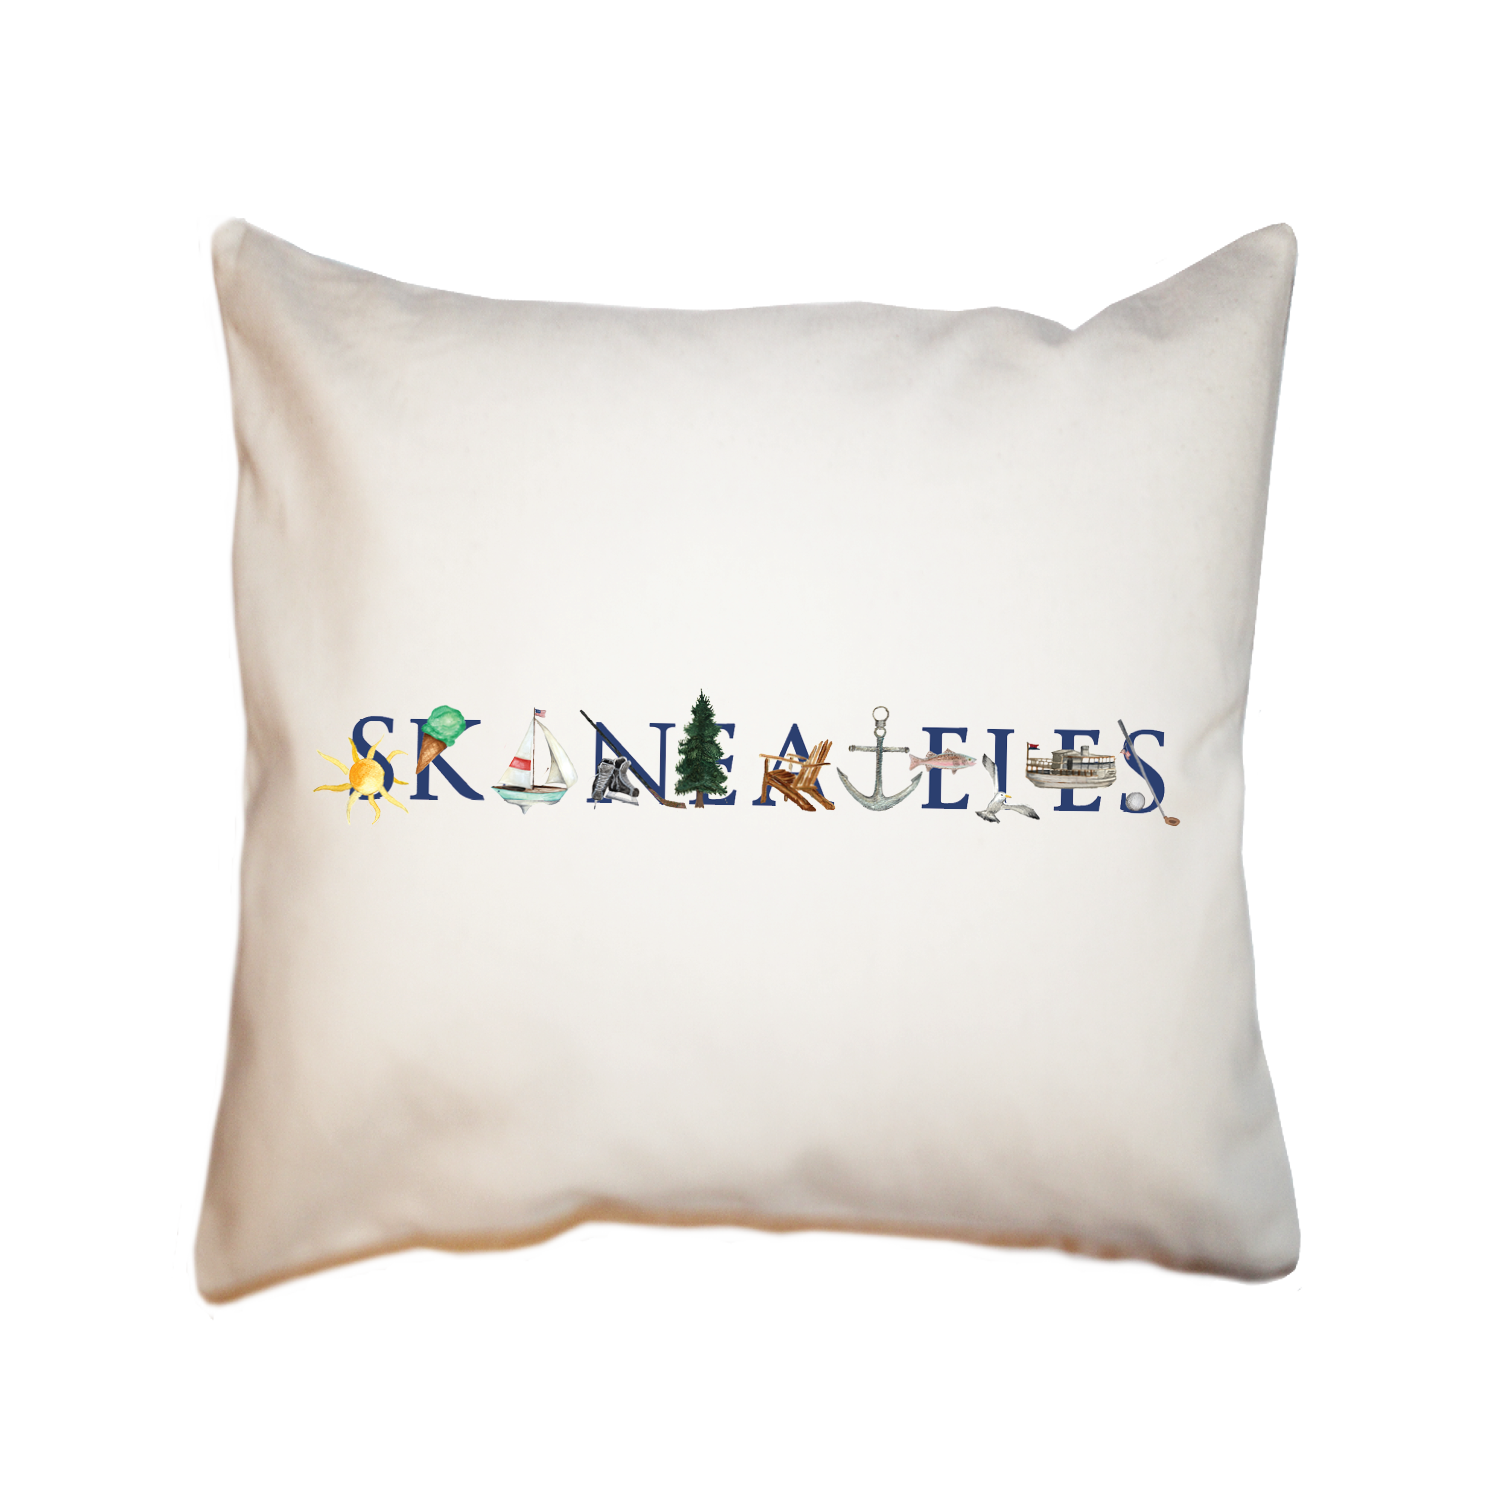 skaneateles square pillow